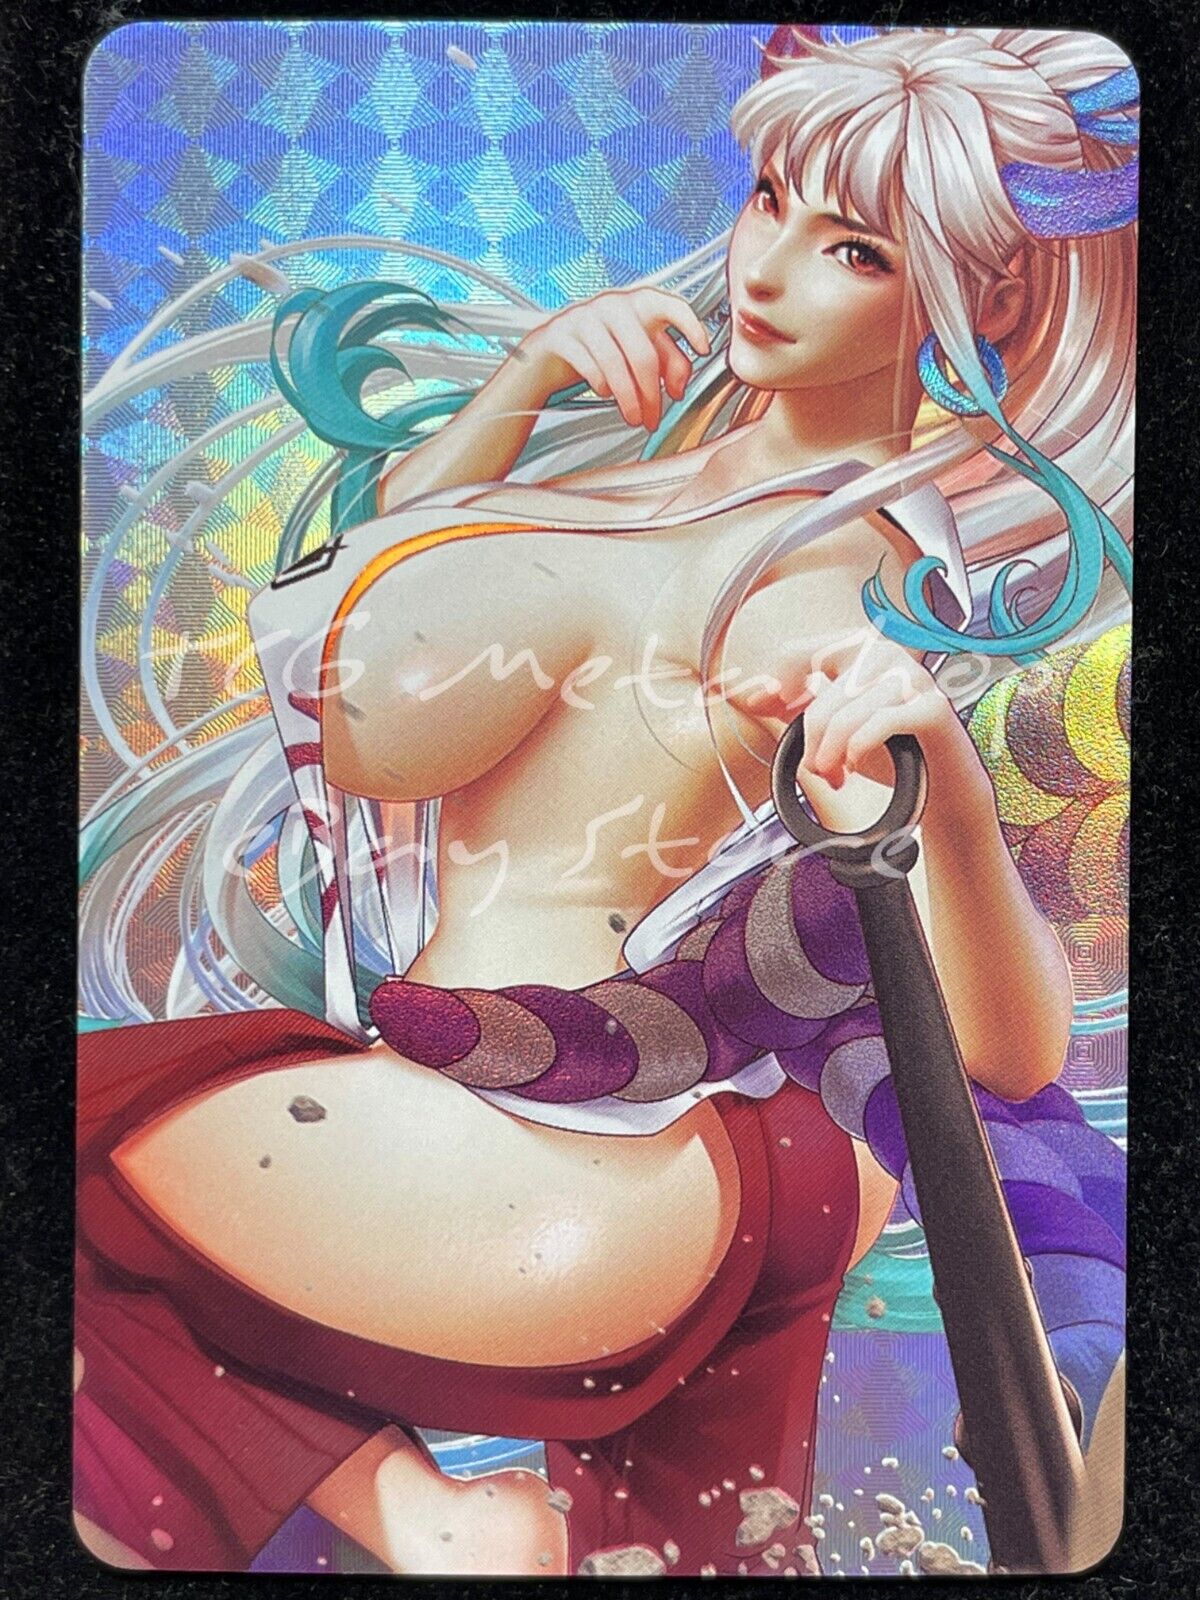 🔥 Yamato One Piece Goddess Story Anime Card ACG # 1532 🔥